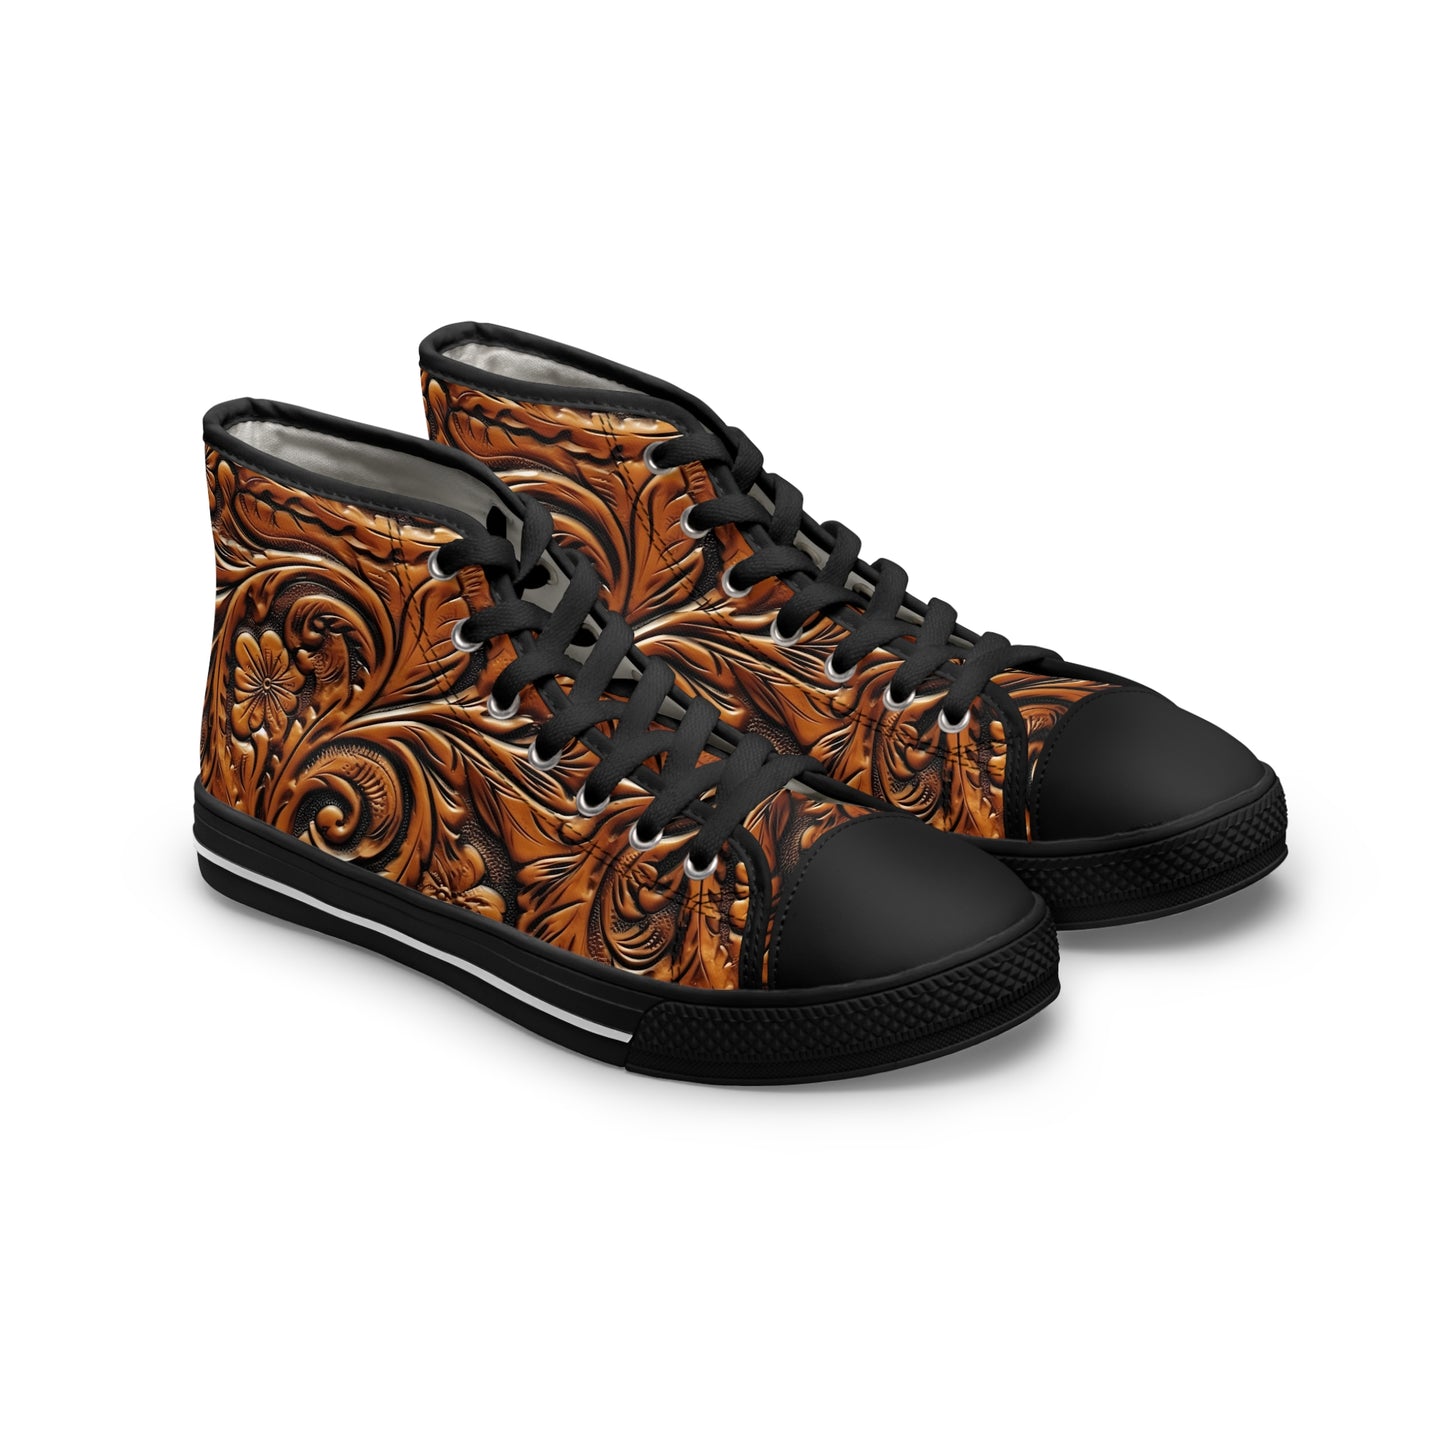 Tooled Leather Women's High-Top Sneakers (Black) by Studio Ten Design